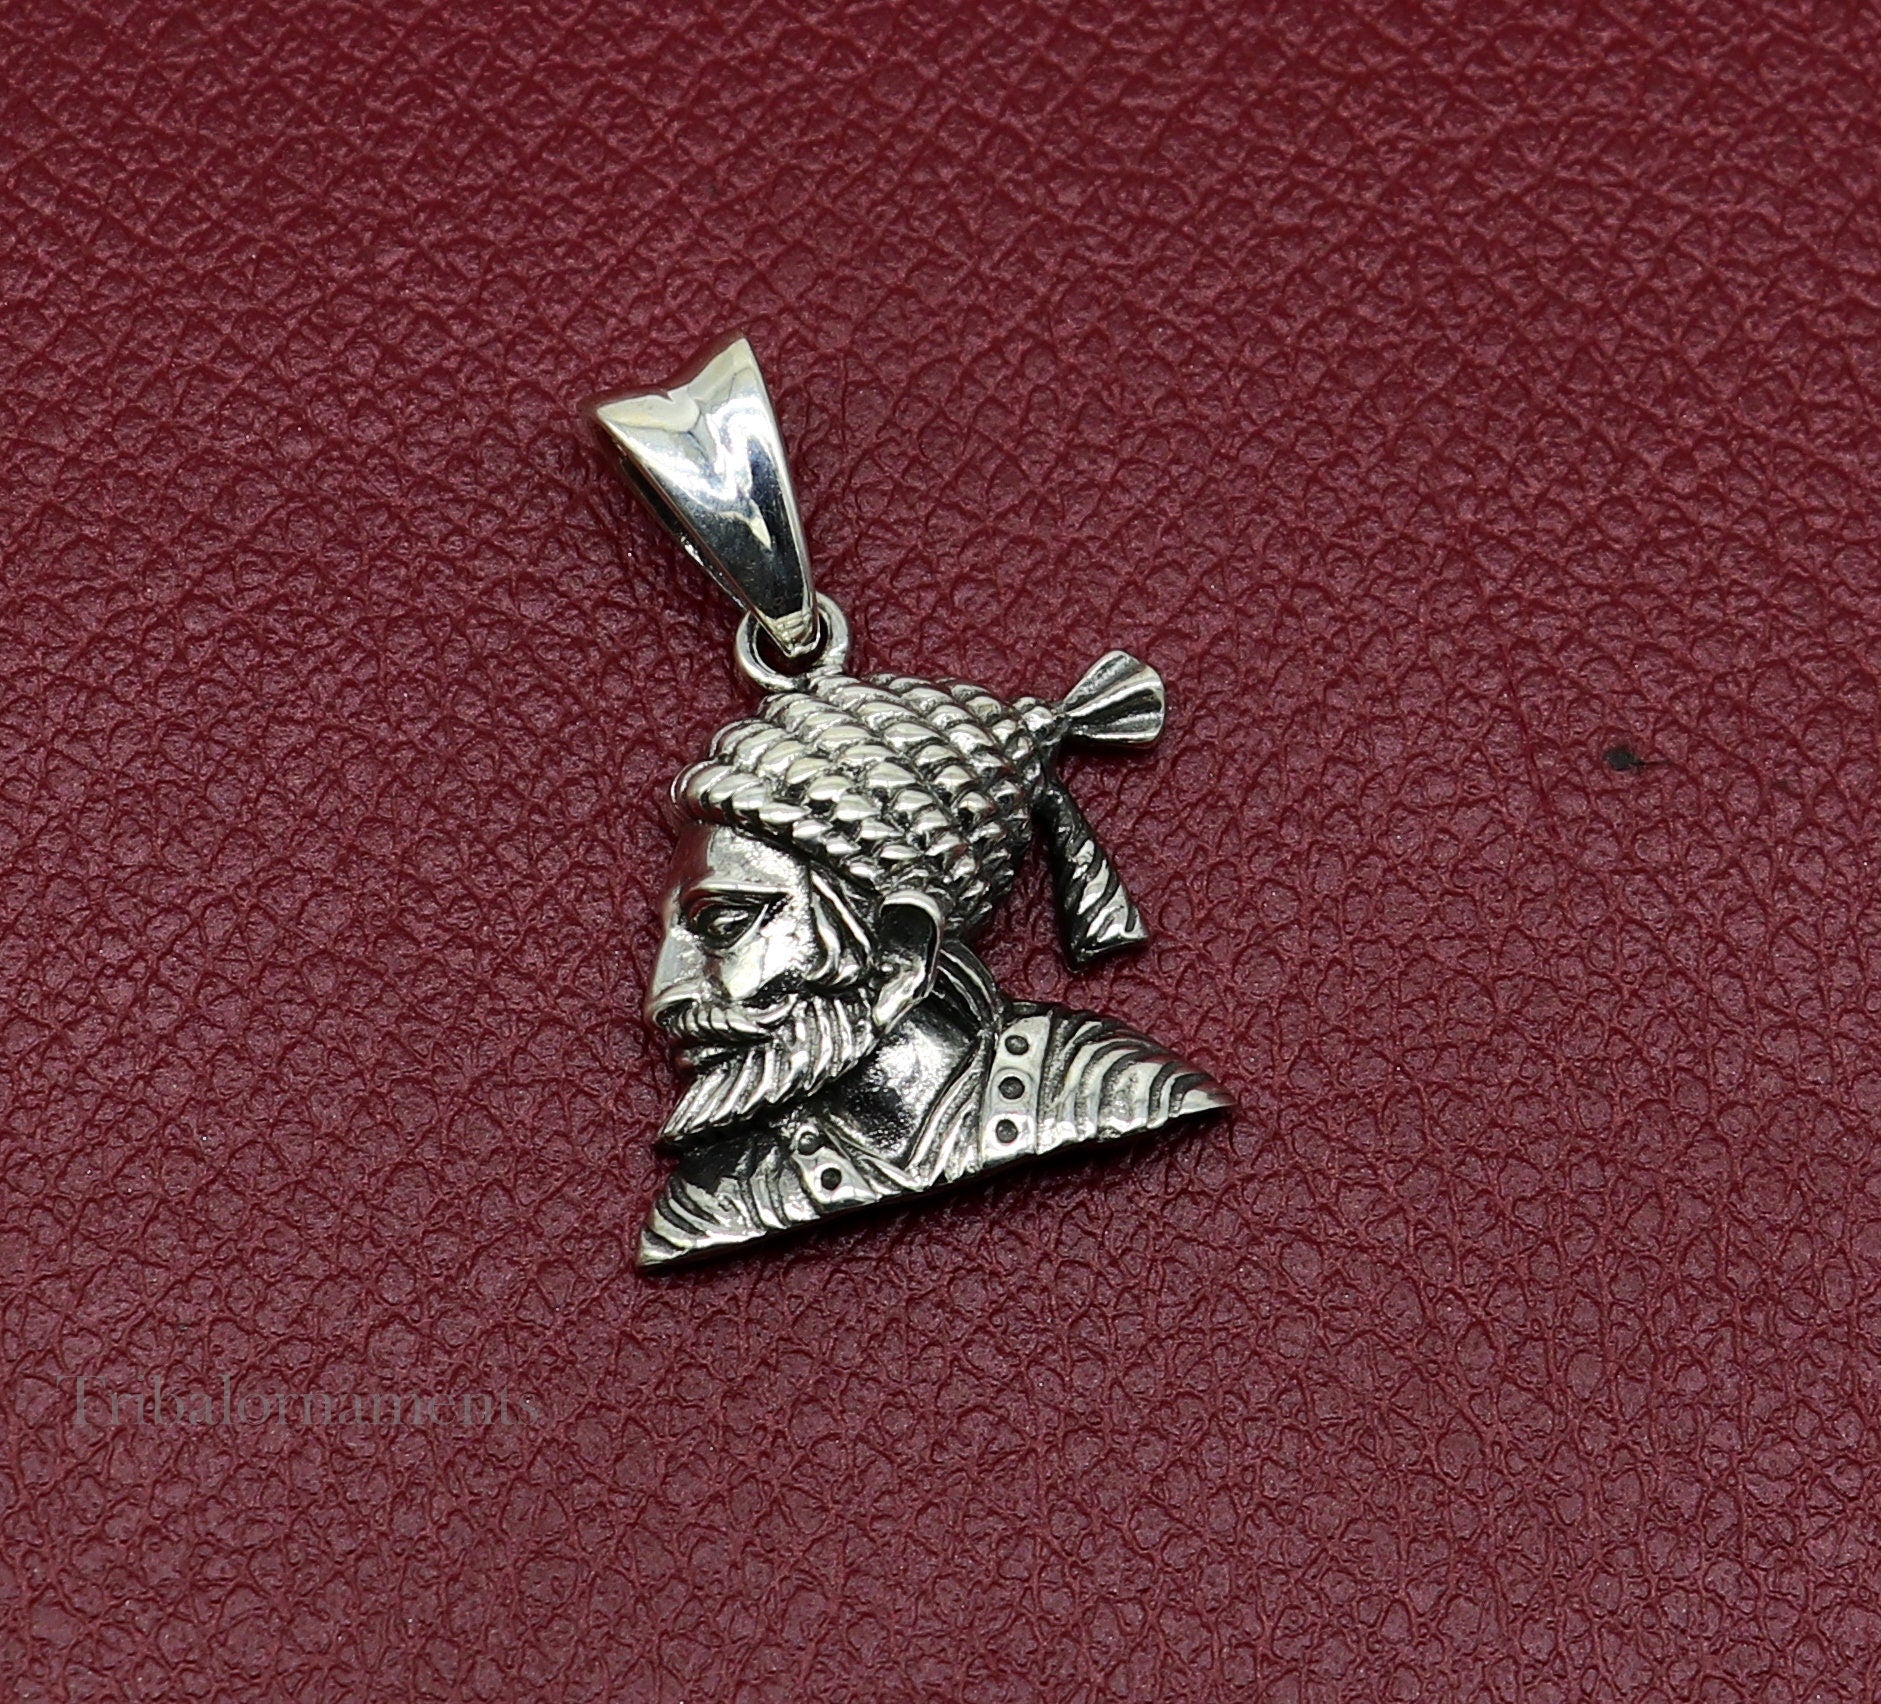 925 sterling silver Maratha king Shivaji pendant, best gifting Royal pendant king shivaji design solid pendant unisex jewelry ssp919 - TRIBAL ORNAMENTS